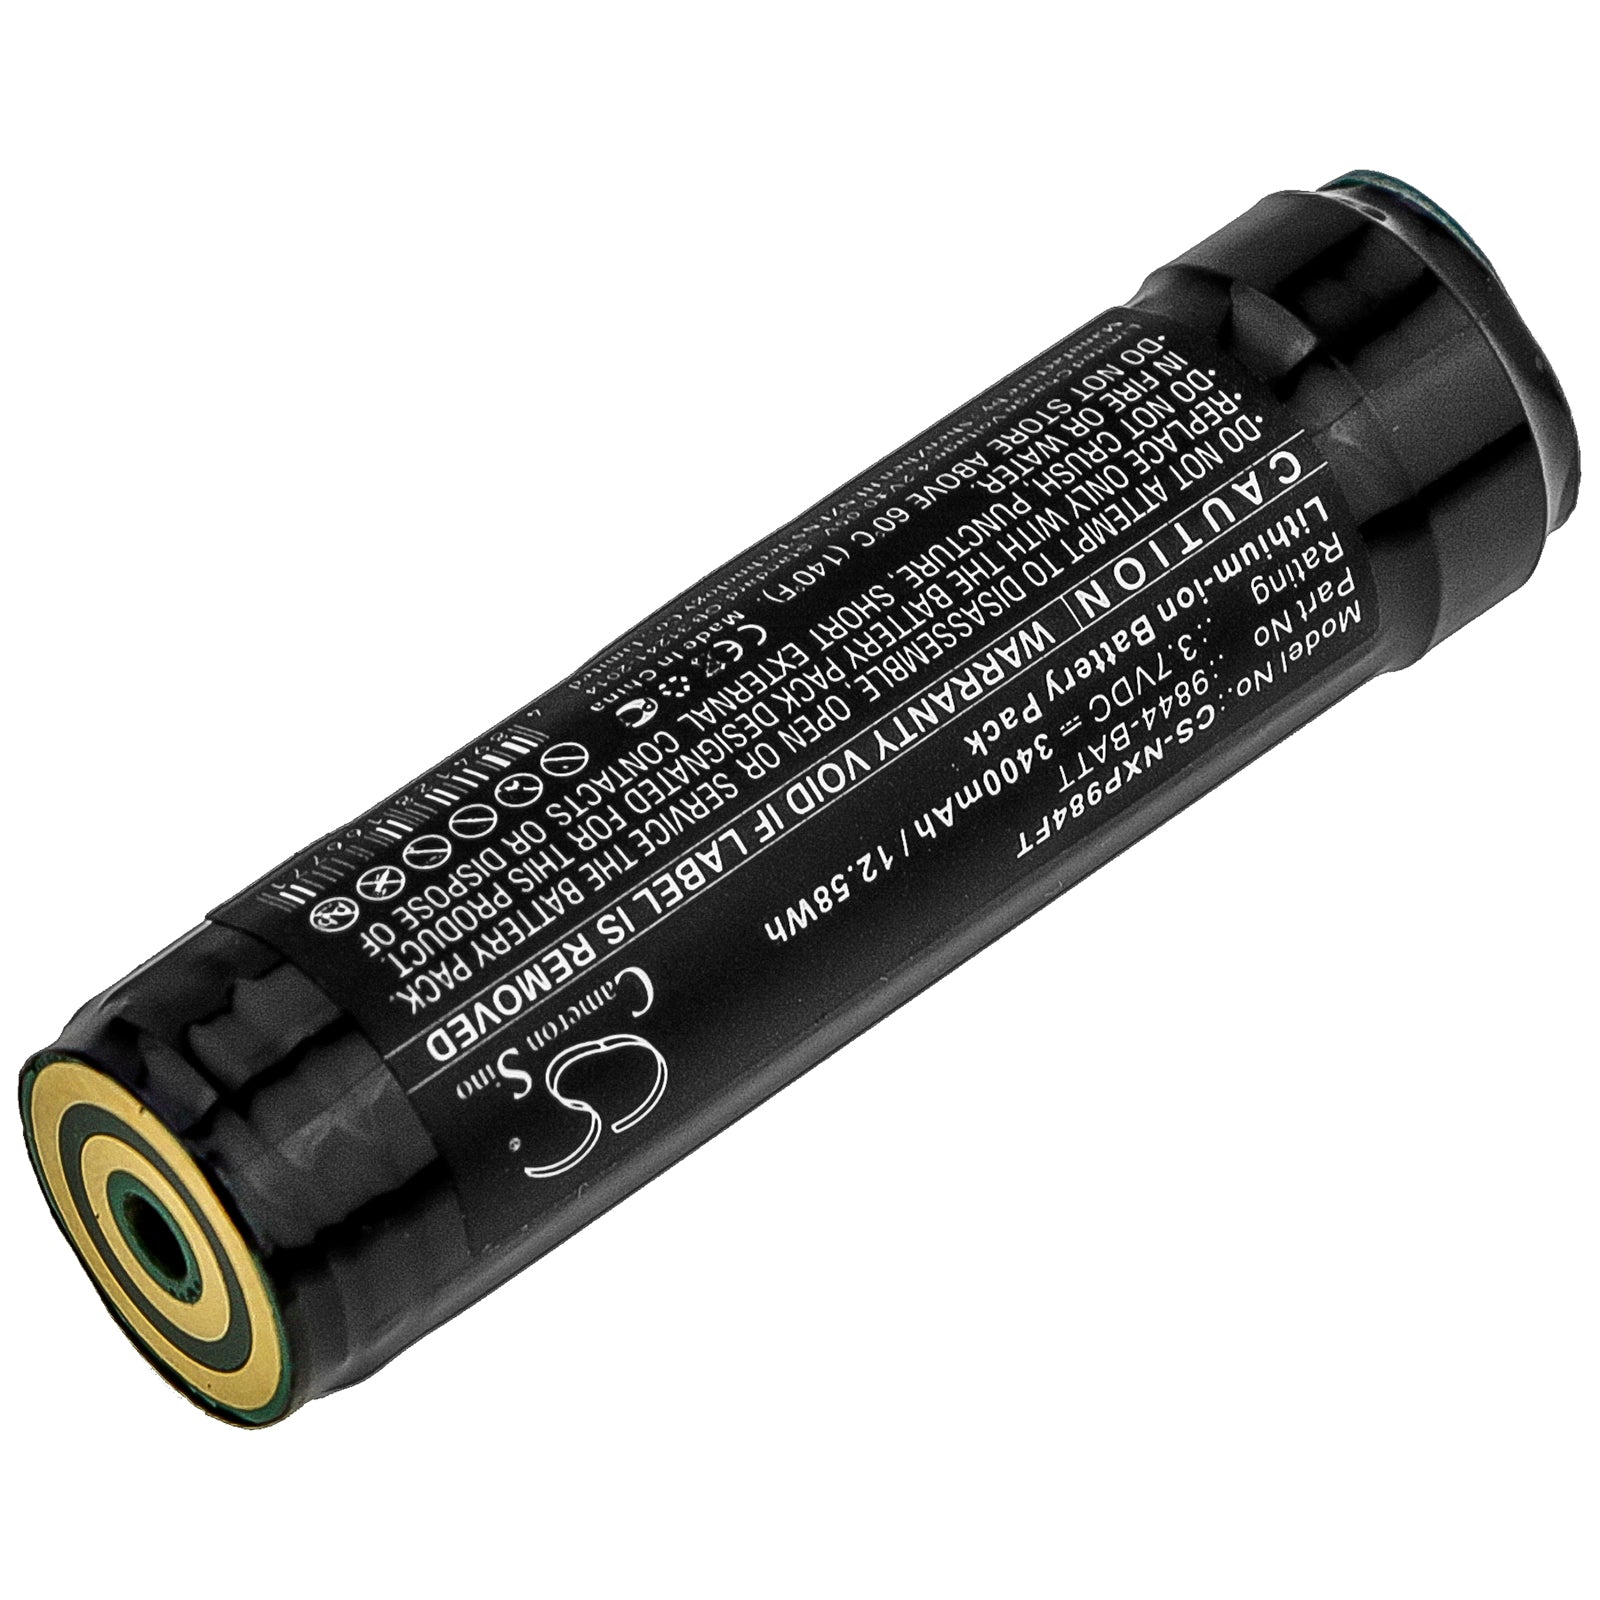 3400mAh 9844-BATT Battery for Nightstick NSR-9844XL, NSP-9842XL, USB-578XL, USB-578XL-BL, USB-578XL-G, USB-578XL-R-SMAVtronics